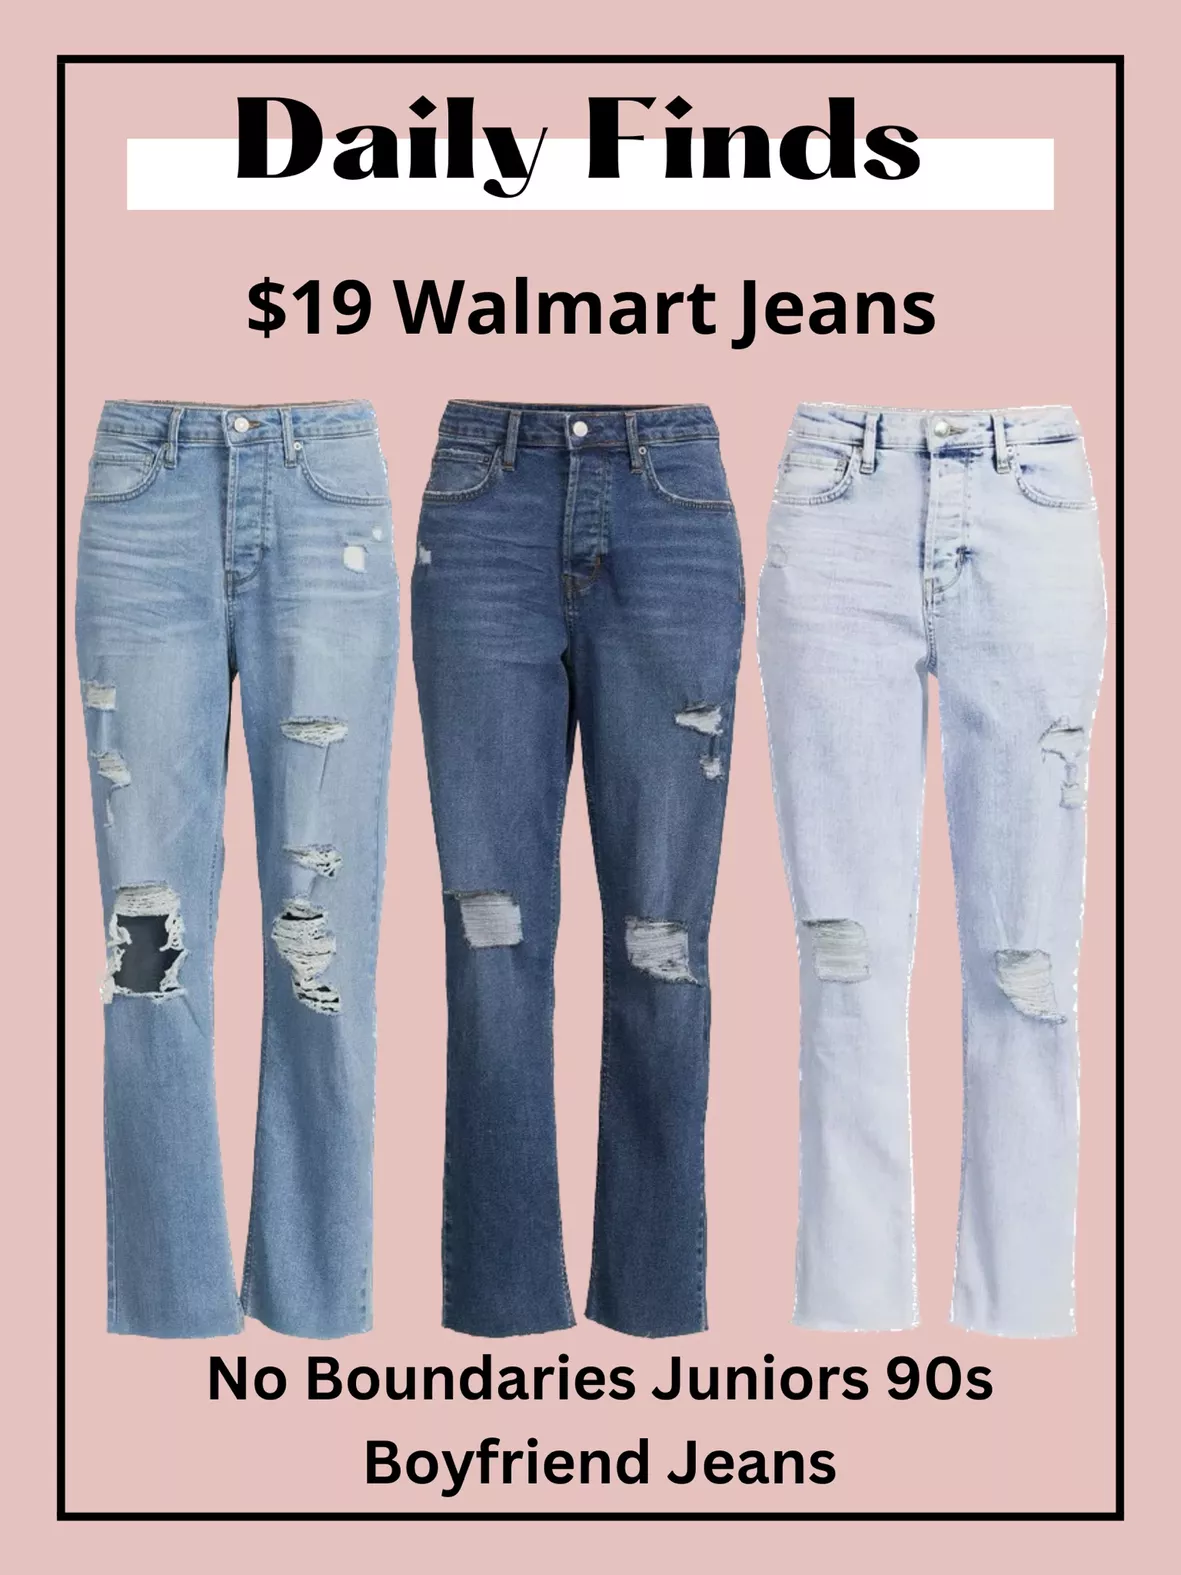 No Boundaries, Jeans